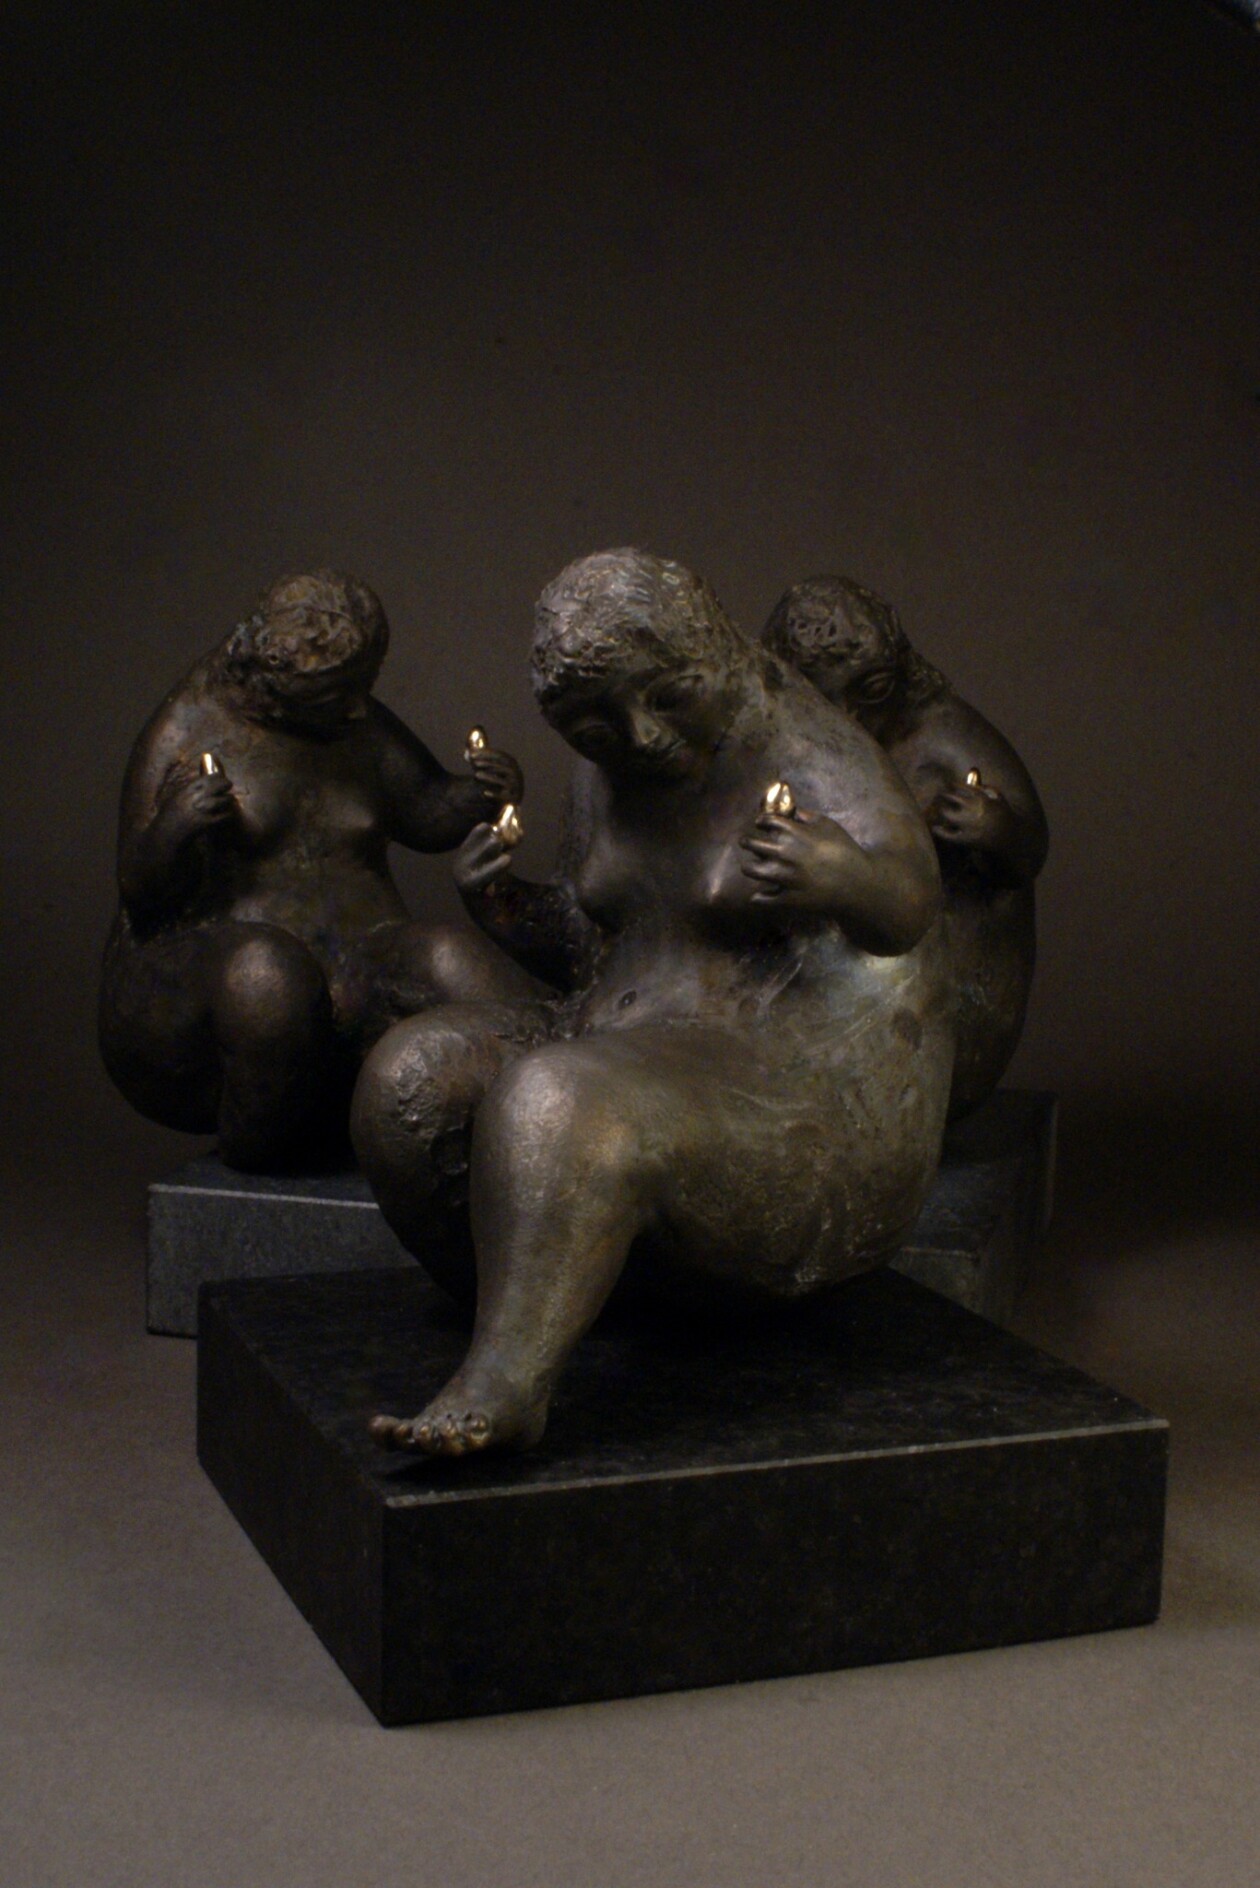 Whispers Of Bronze, The Enigmatic Metal Sculptures Of Aurelija Simkute (30)